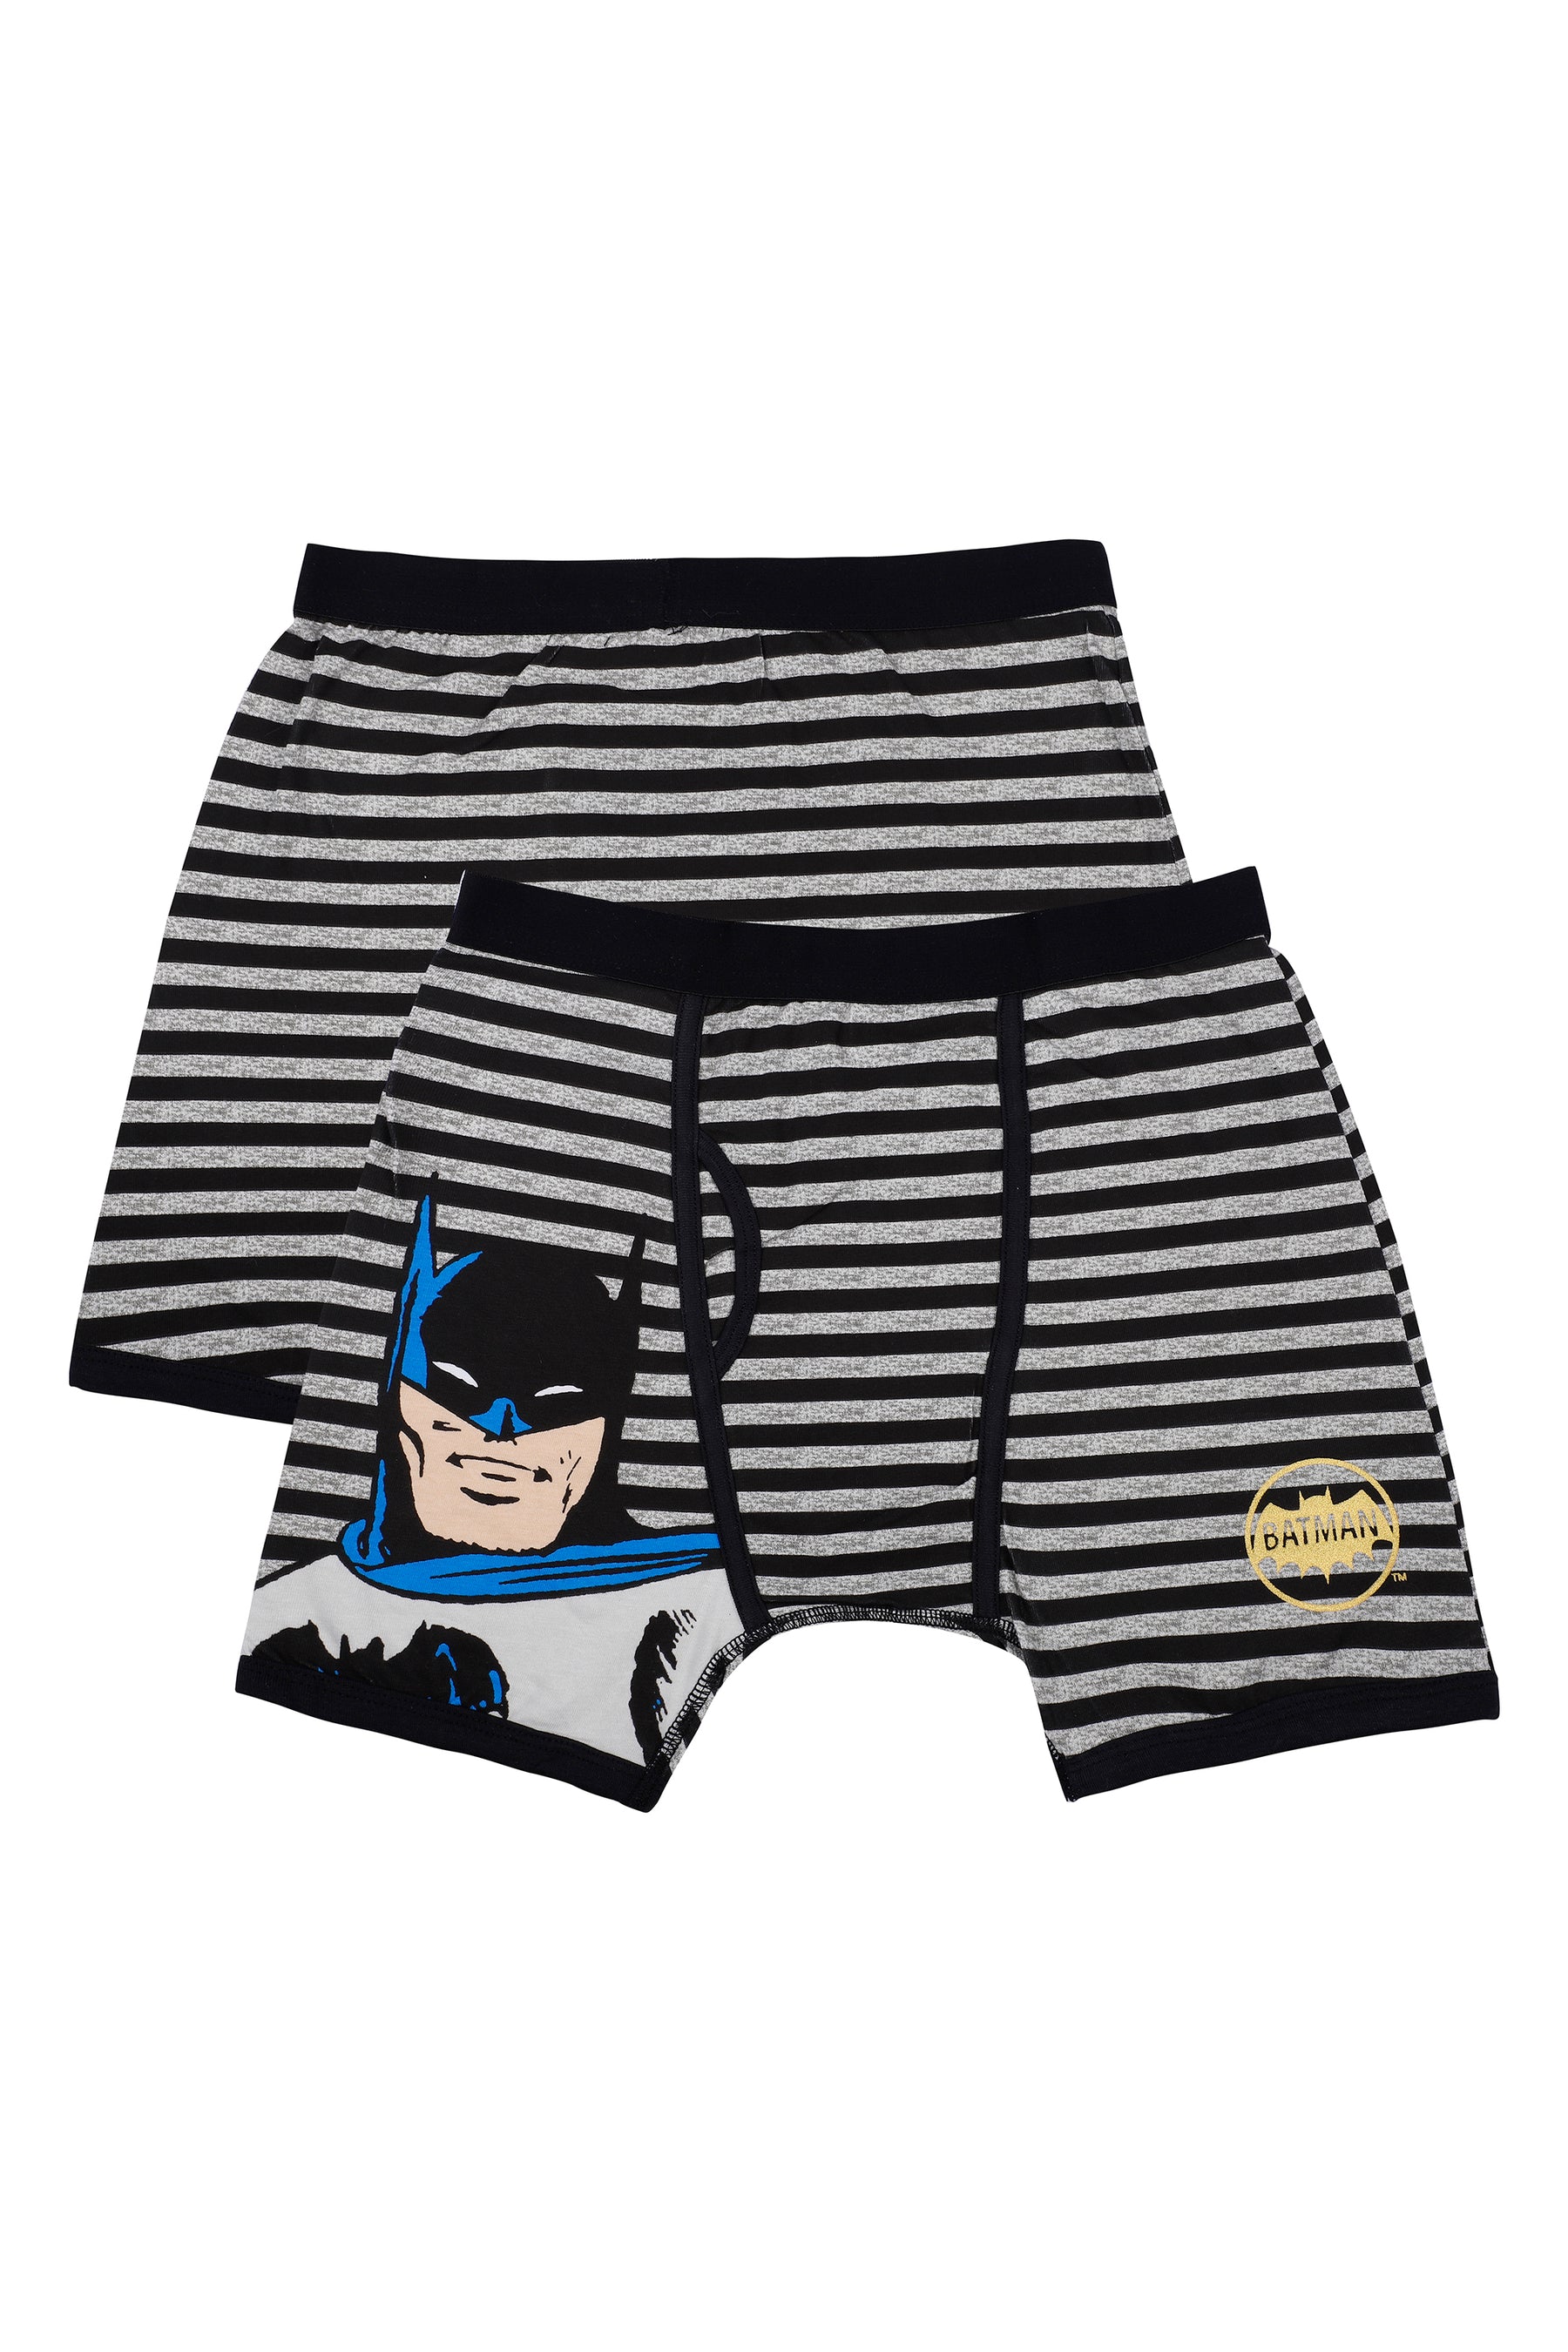 BATMAN Boys' DC Comics Underwear Multi Size 3